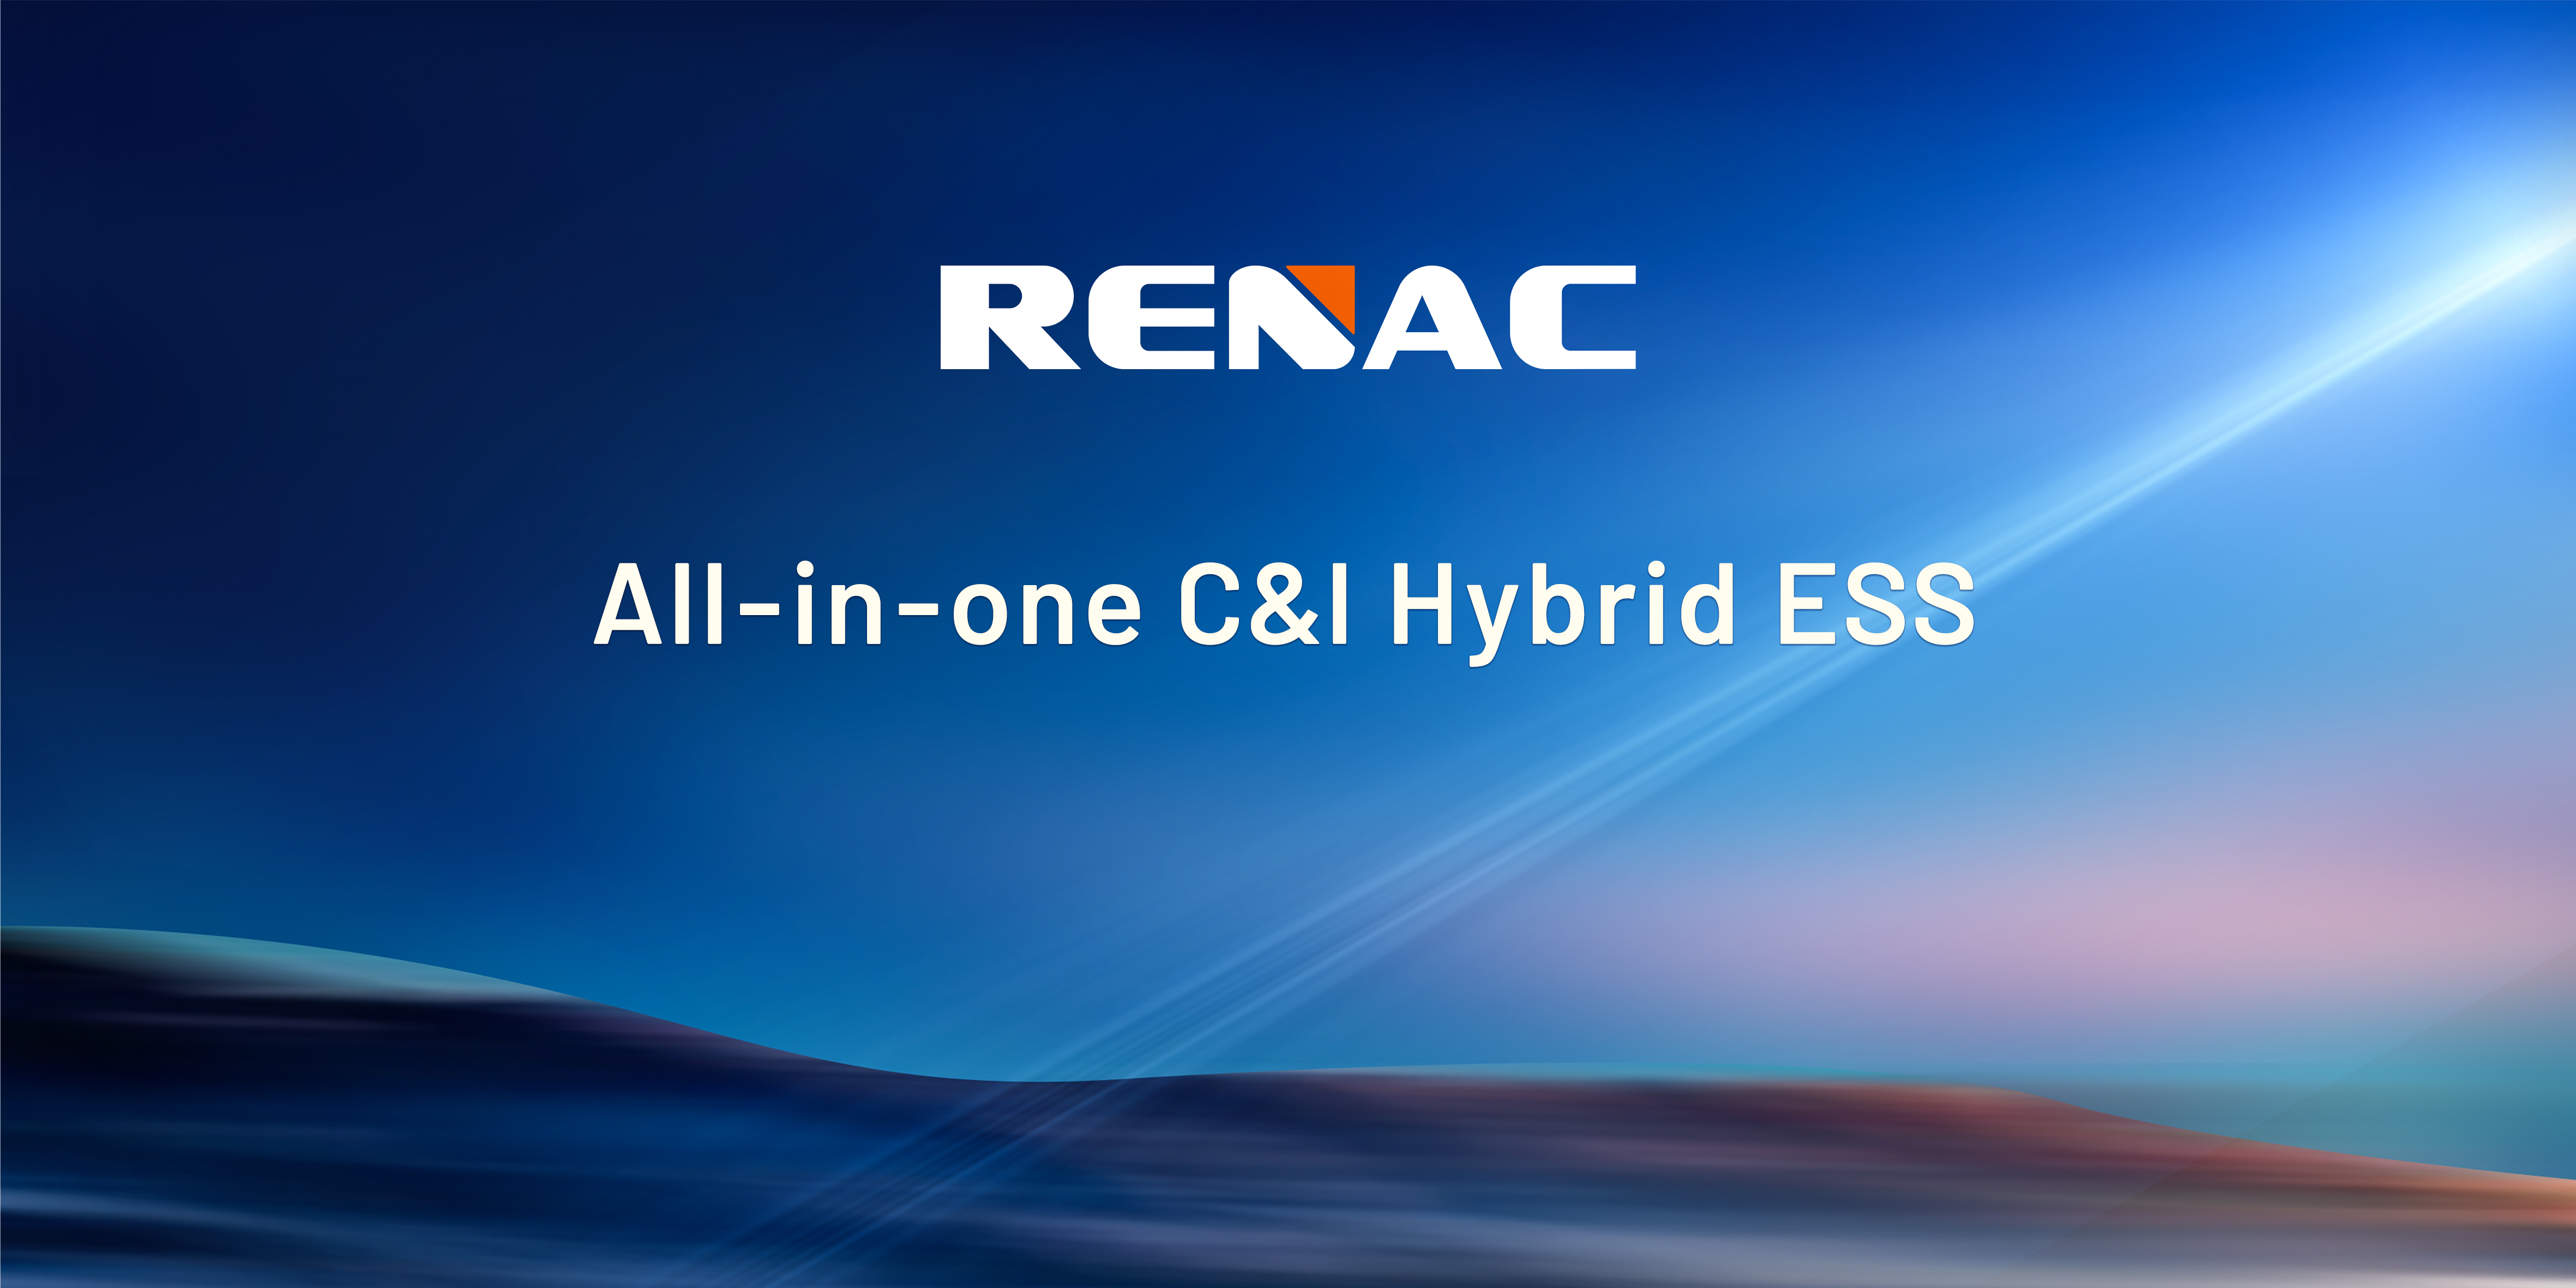 All-in-one C&l Hybrid ESS